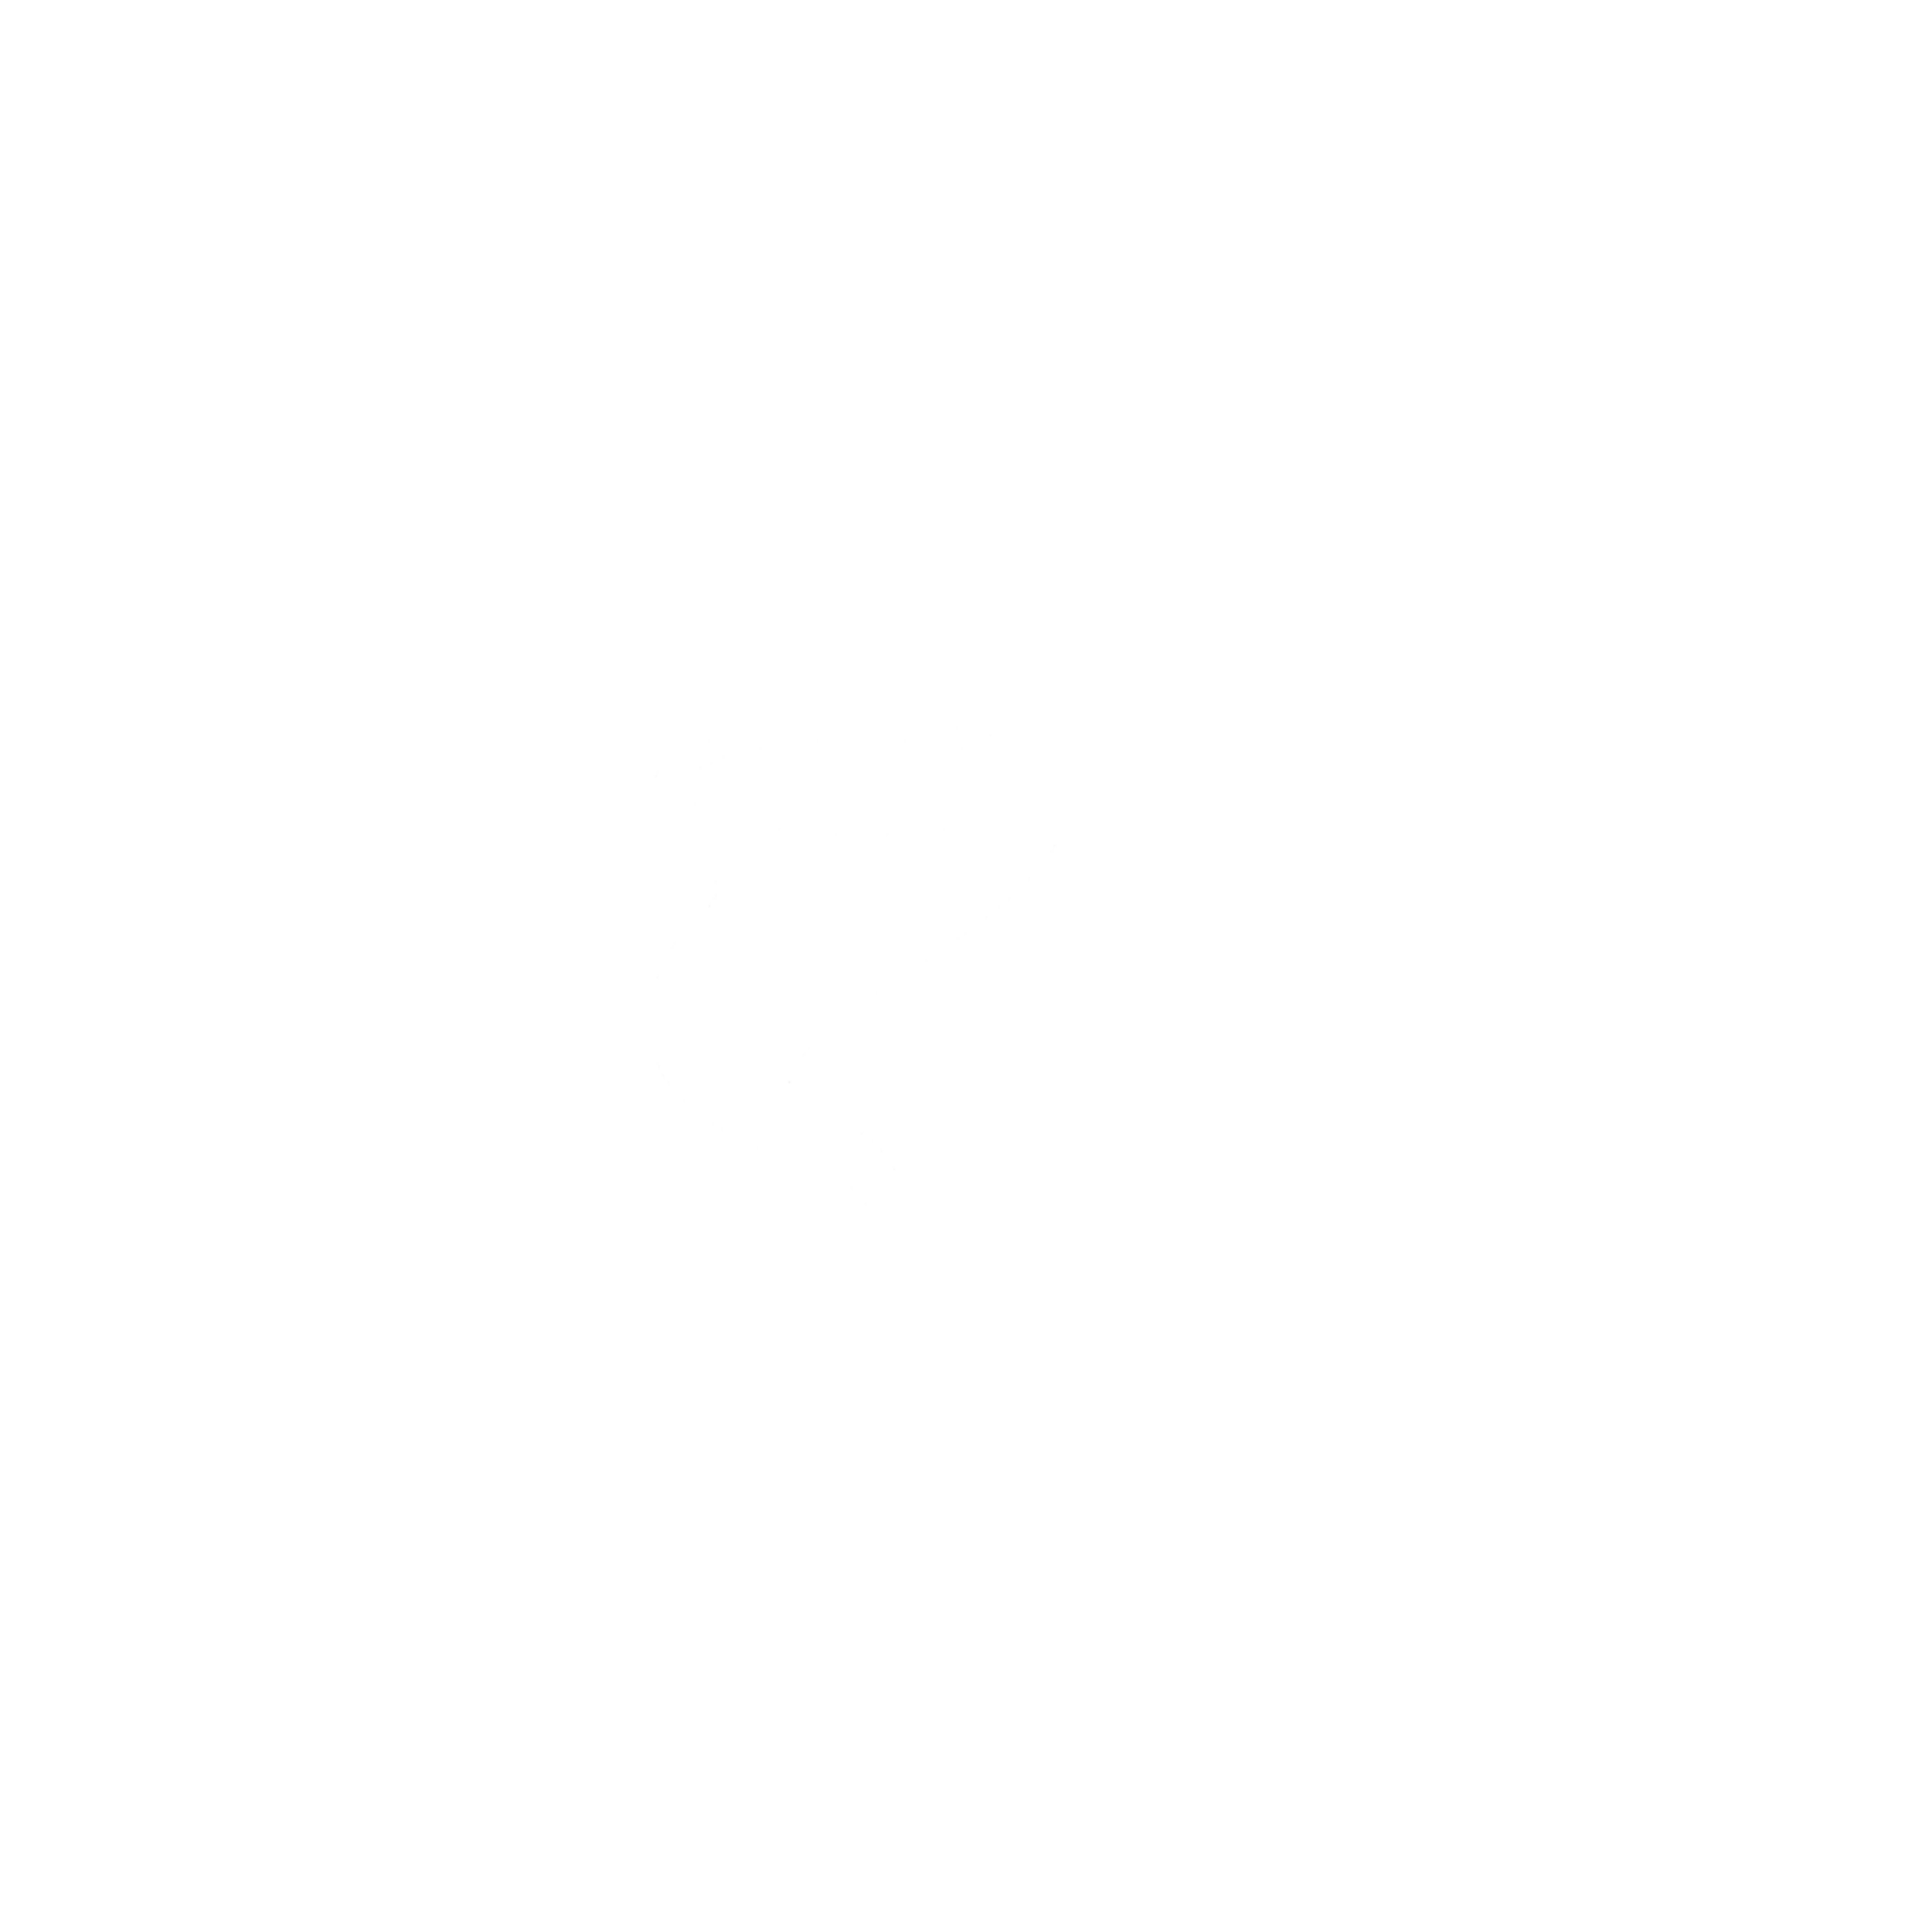 Peter Forister